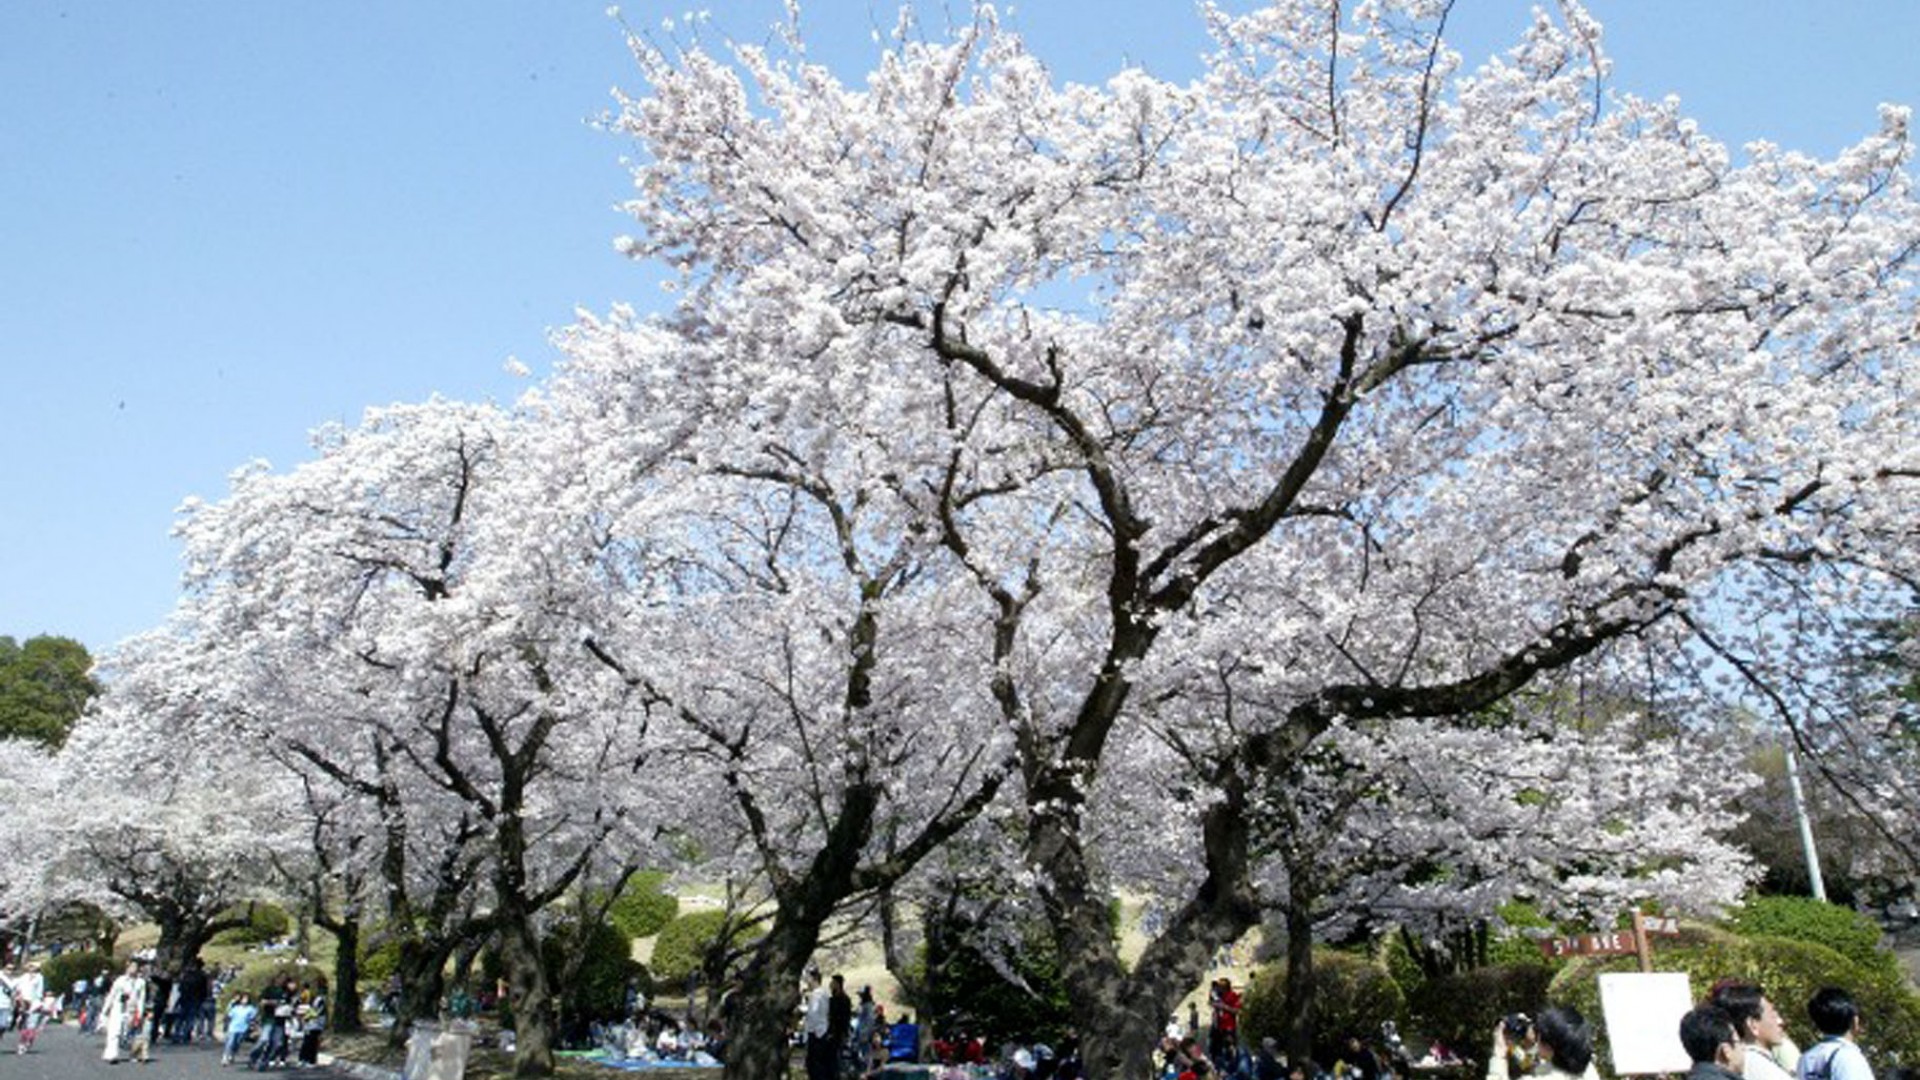 Festival de l'United States Army Camp Zama Sakura (floraison des cerisiers)